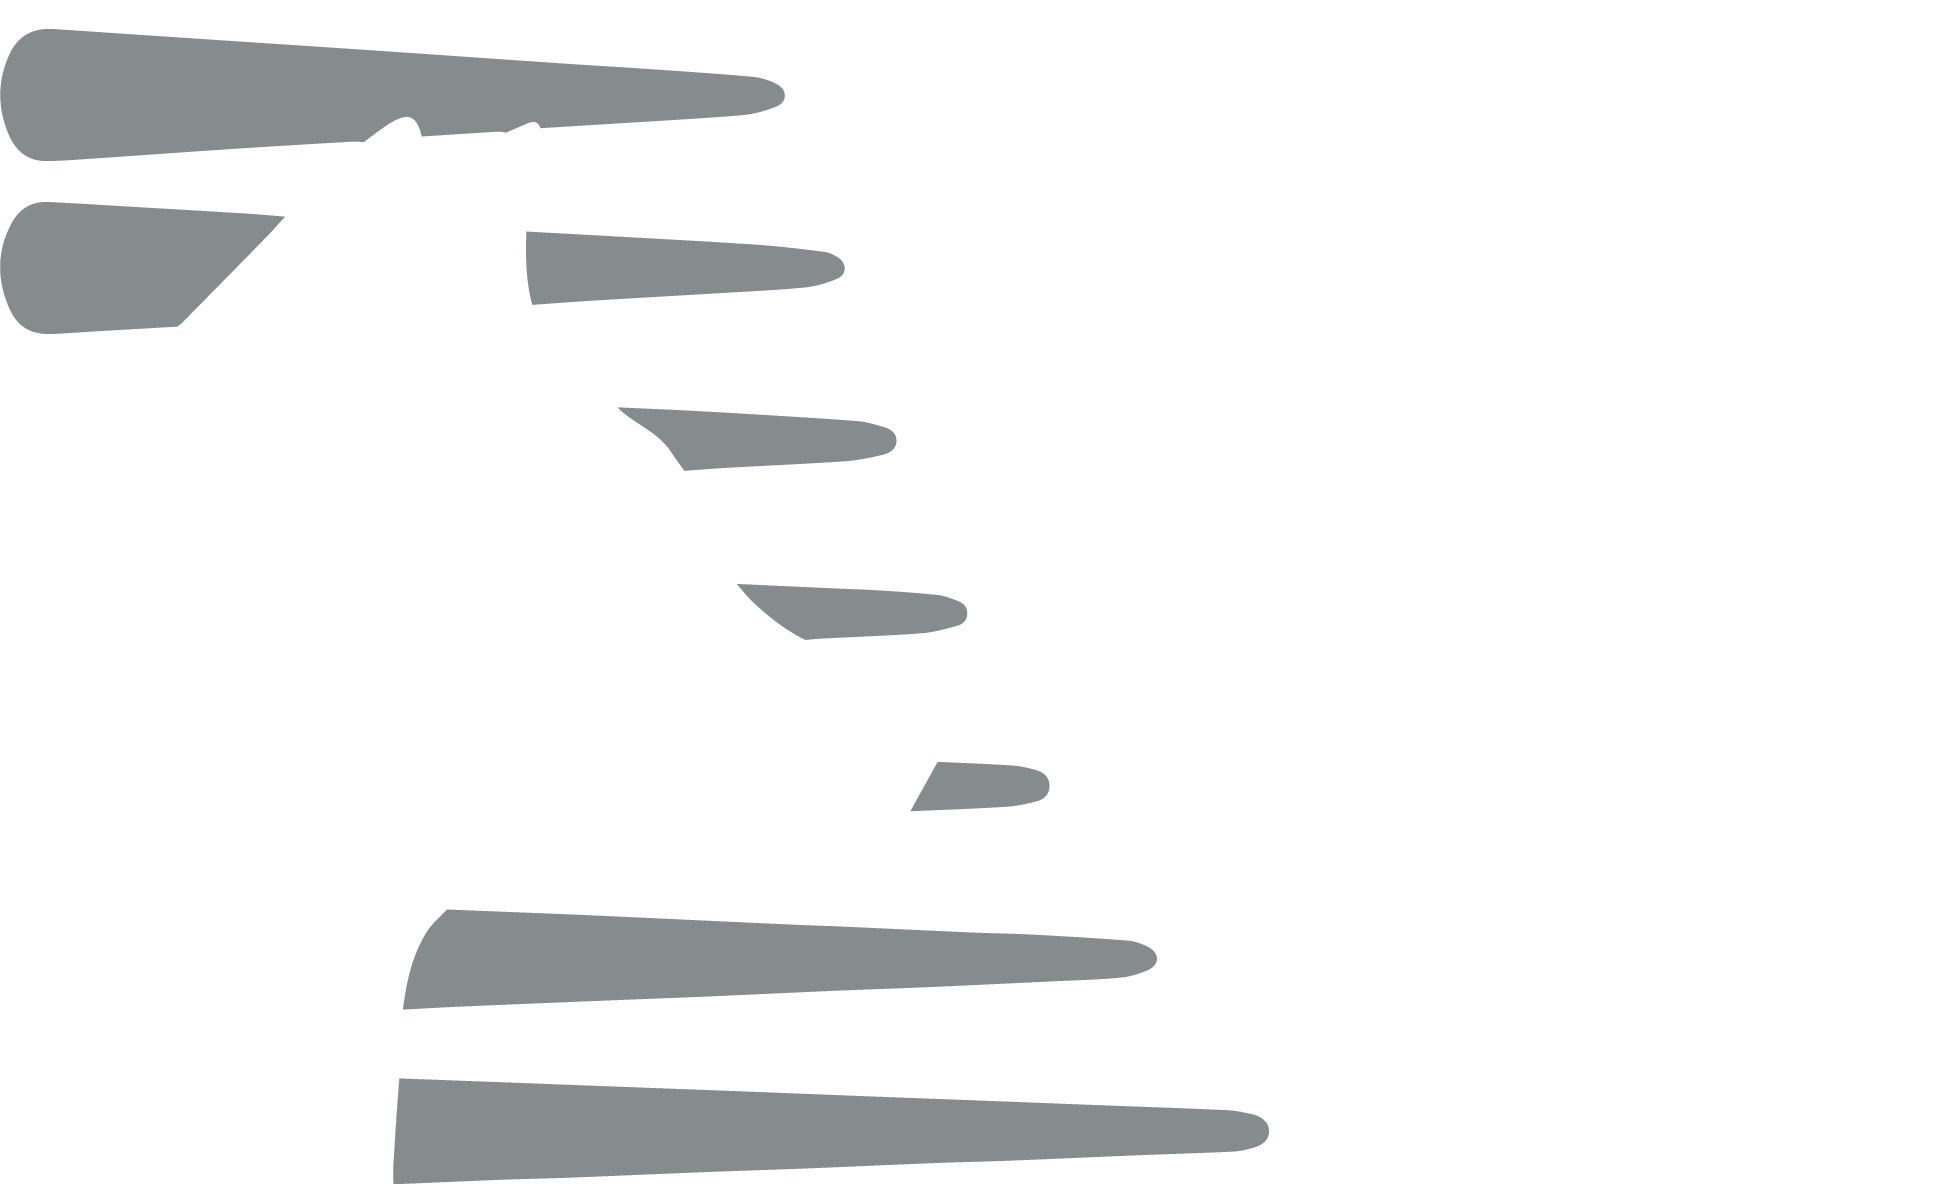 moran-court-vets-Logo-white-grey